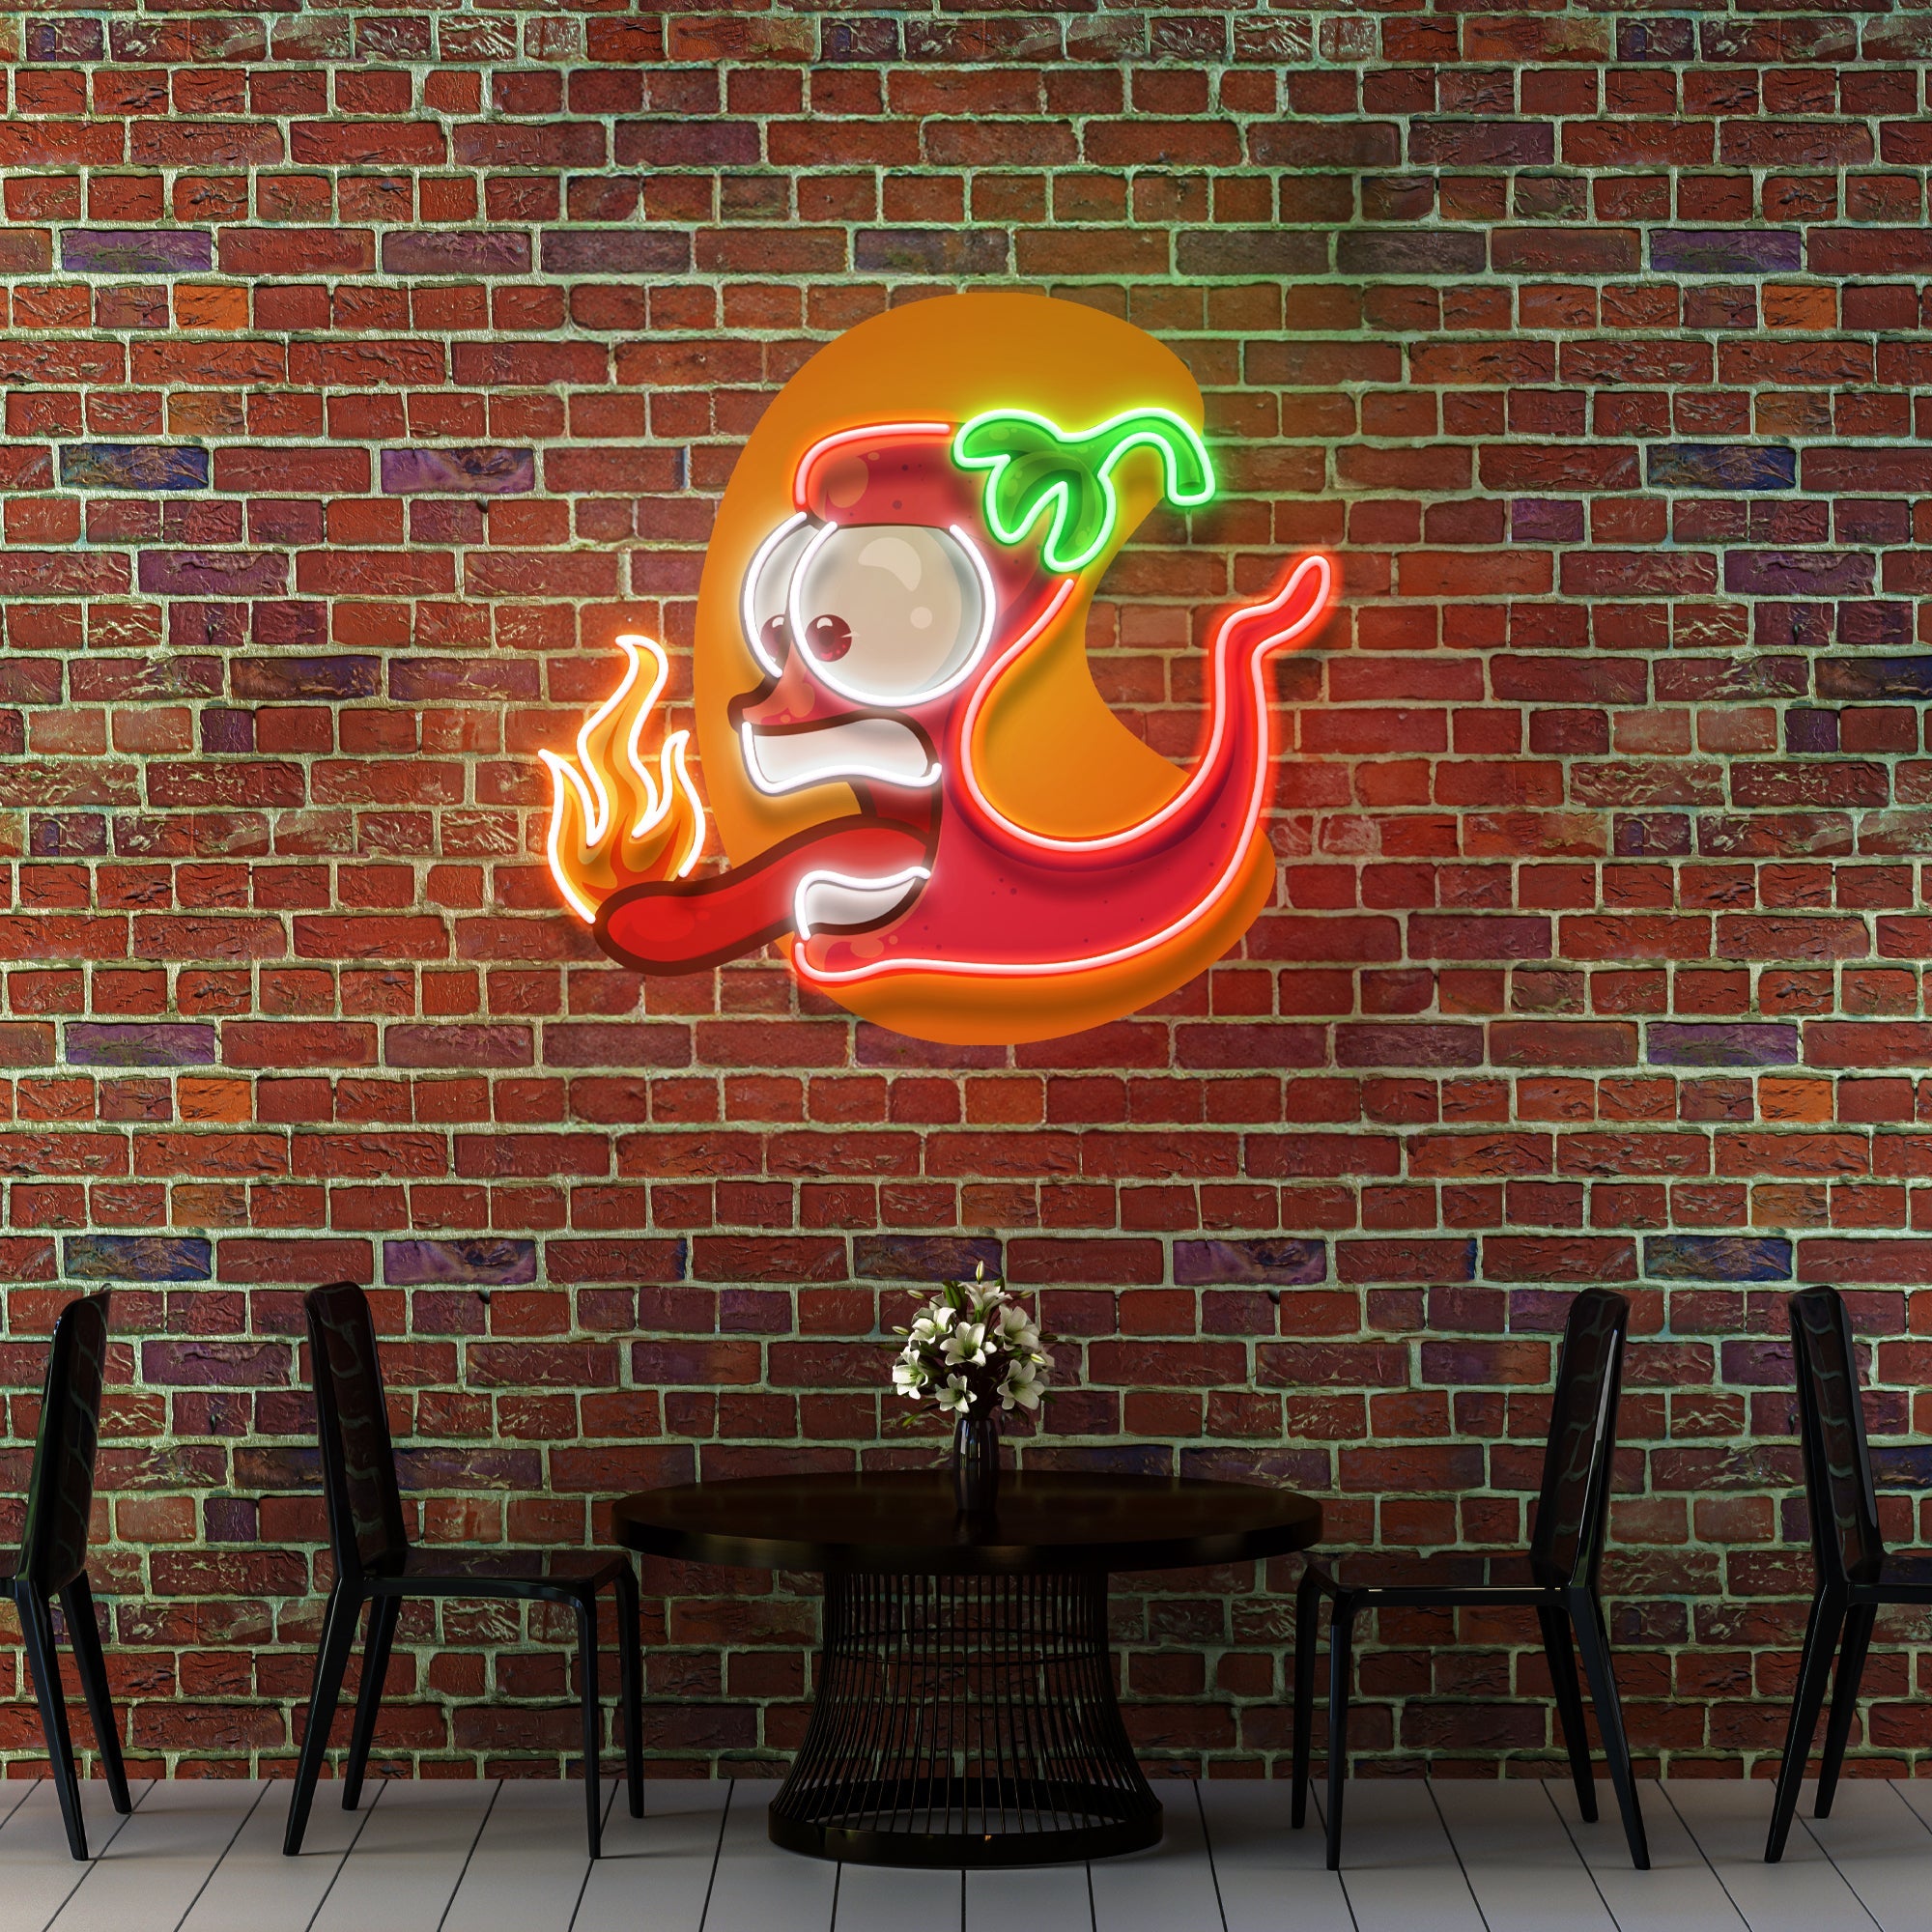 Red Chili Mascot Mexican Restaurant Decor Artwork Led Neon Sign Light - Neonbir